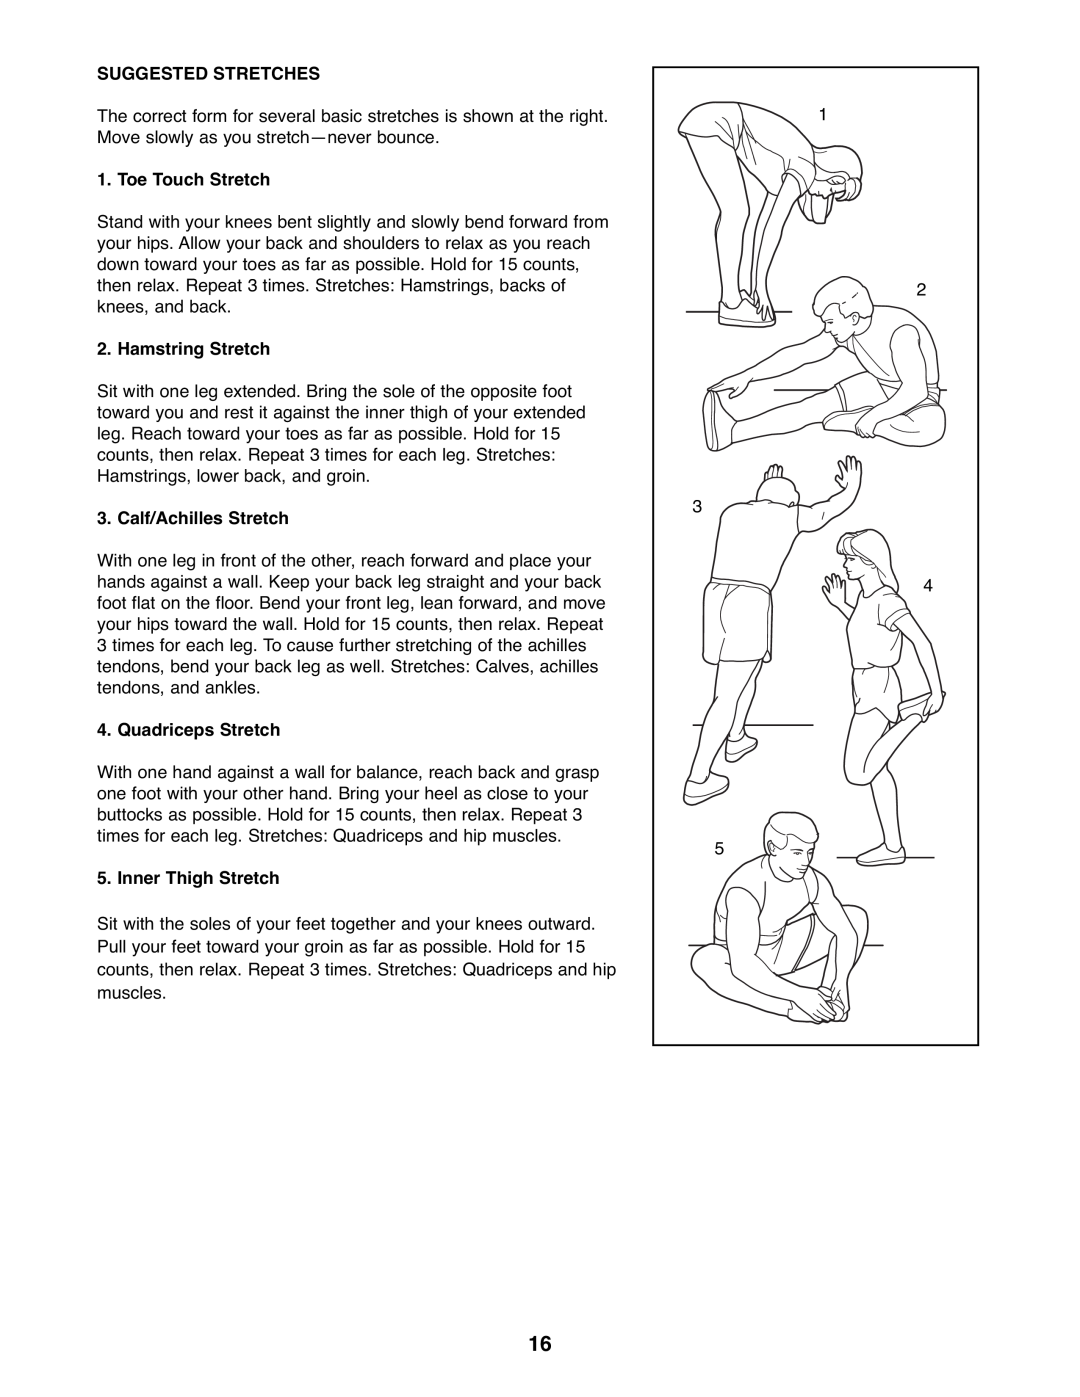 ProForm PFEX1995.1 Suggested Stretches, Toe Touch Stretch, Hamstring Stretch, Calf/Achilles Stretch, Quadriceps Stretch 